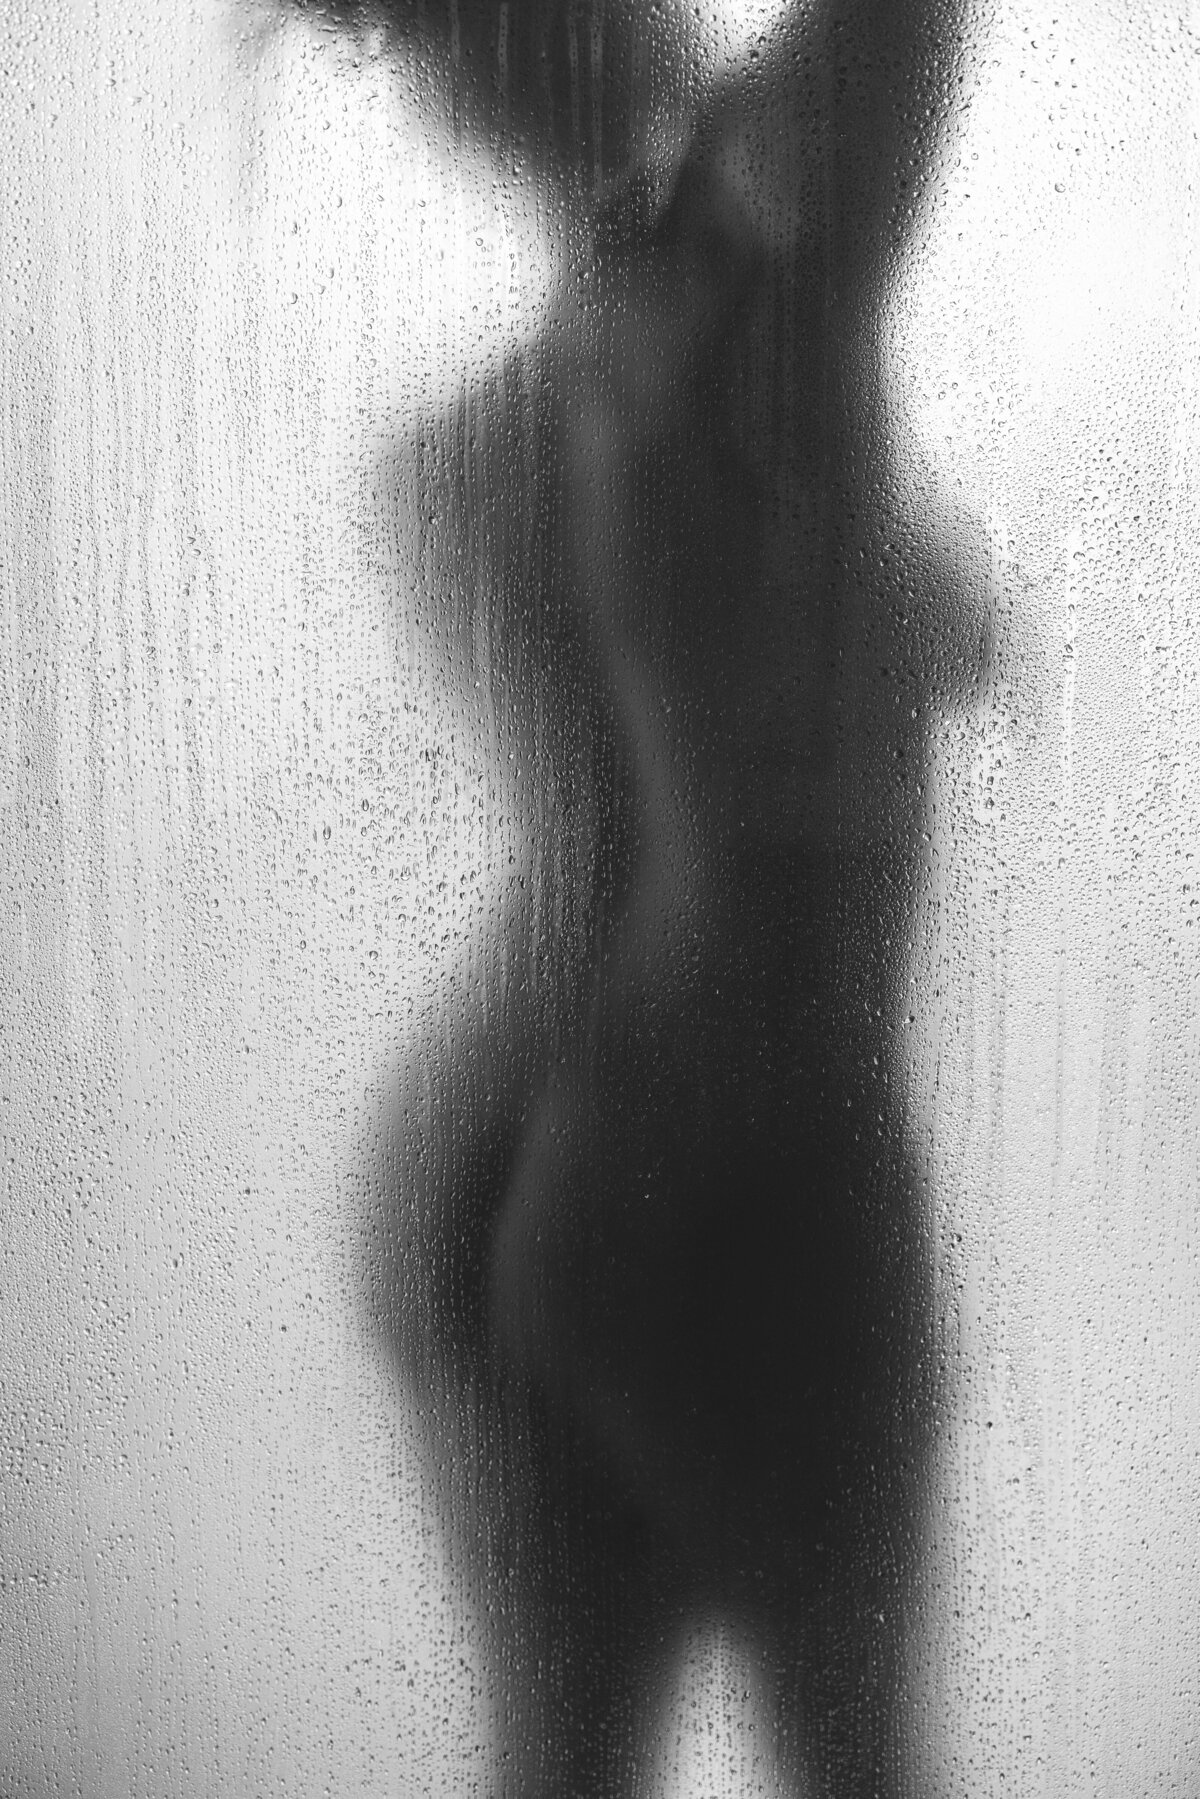 Black woman posing behind a shower door for her boudoir image